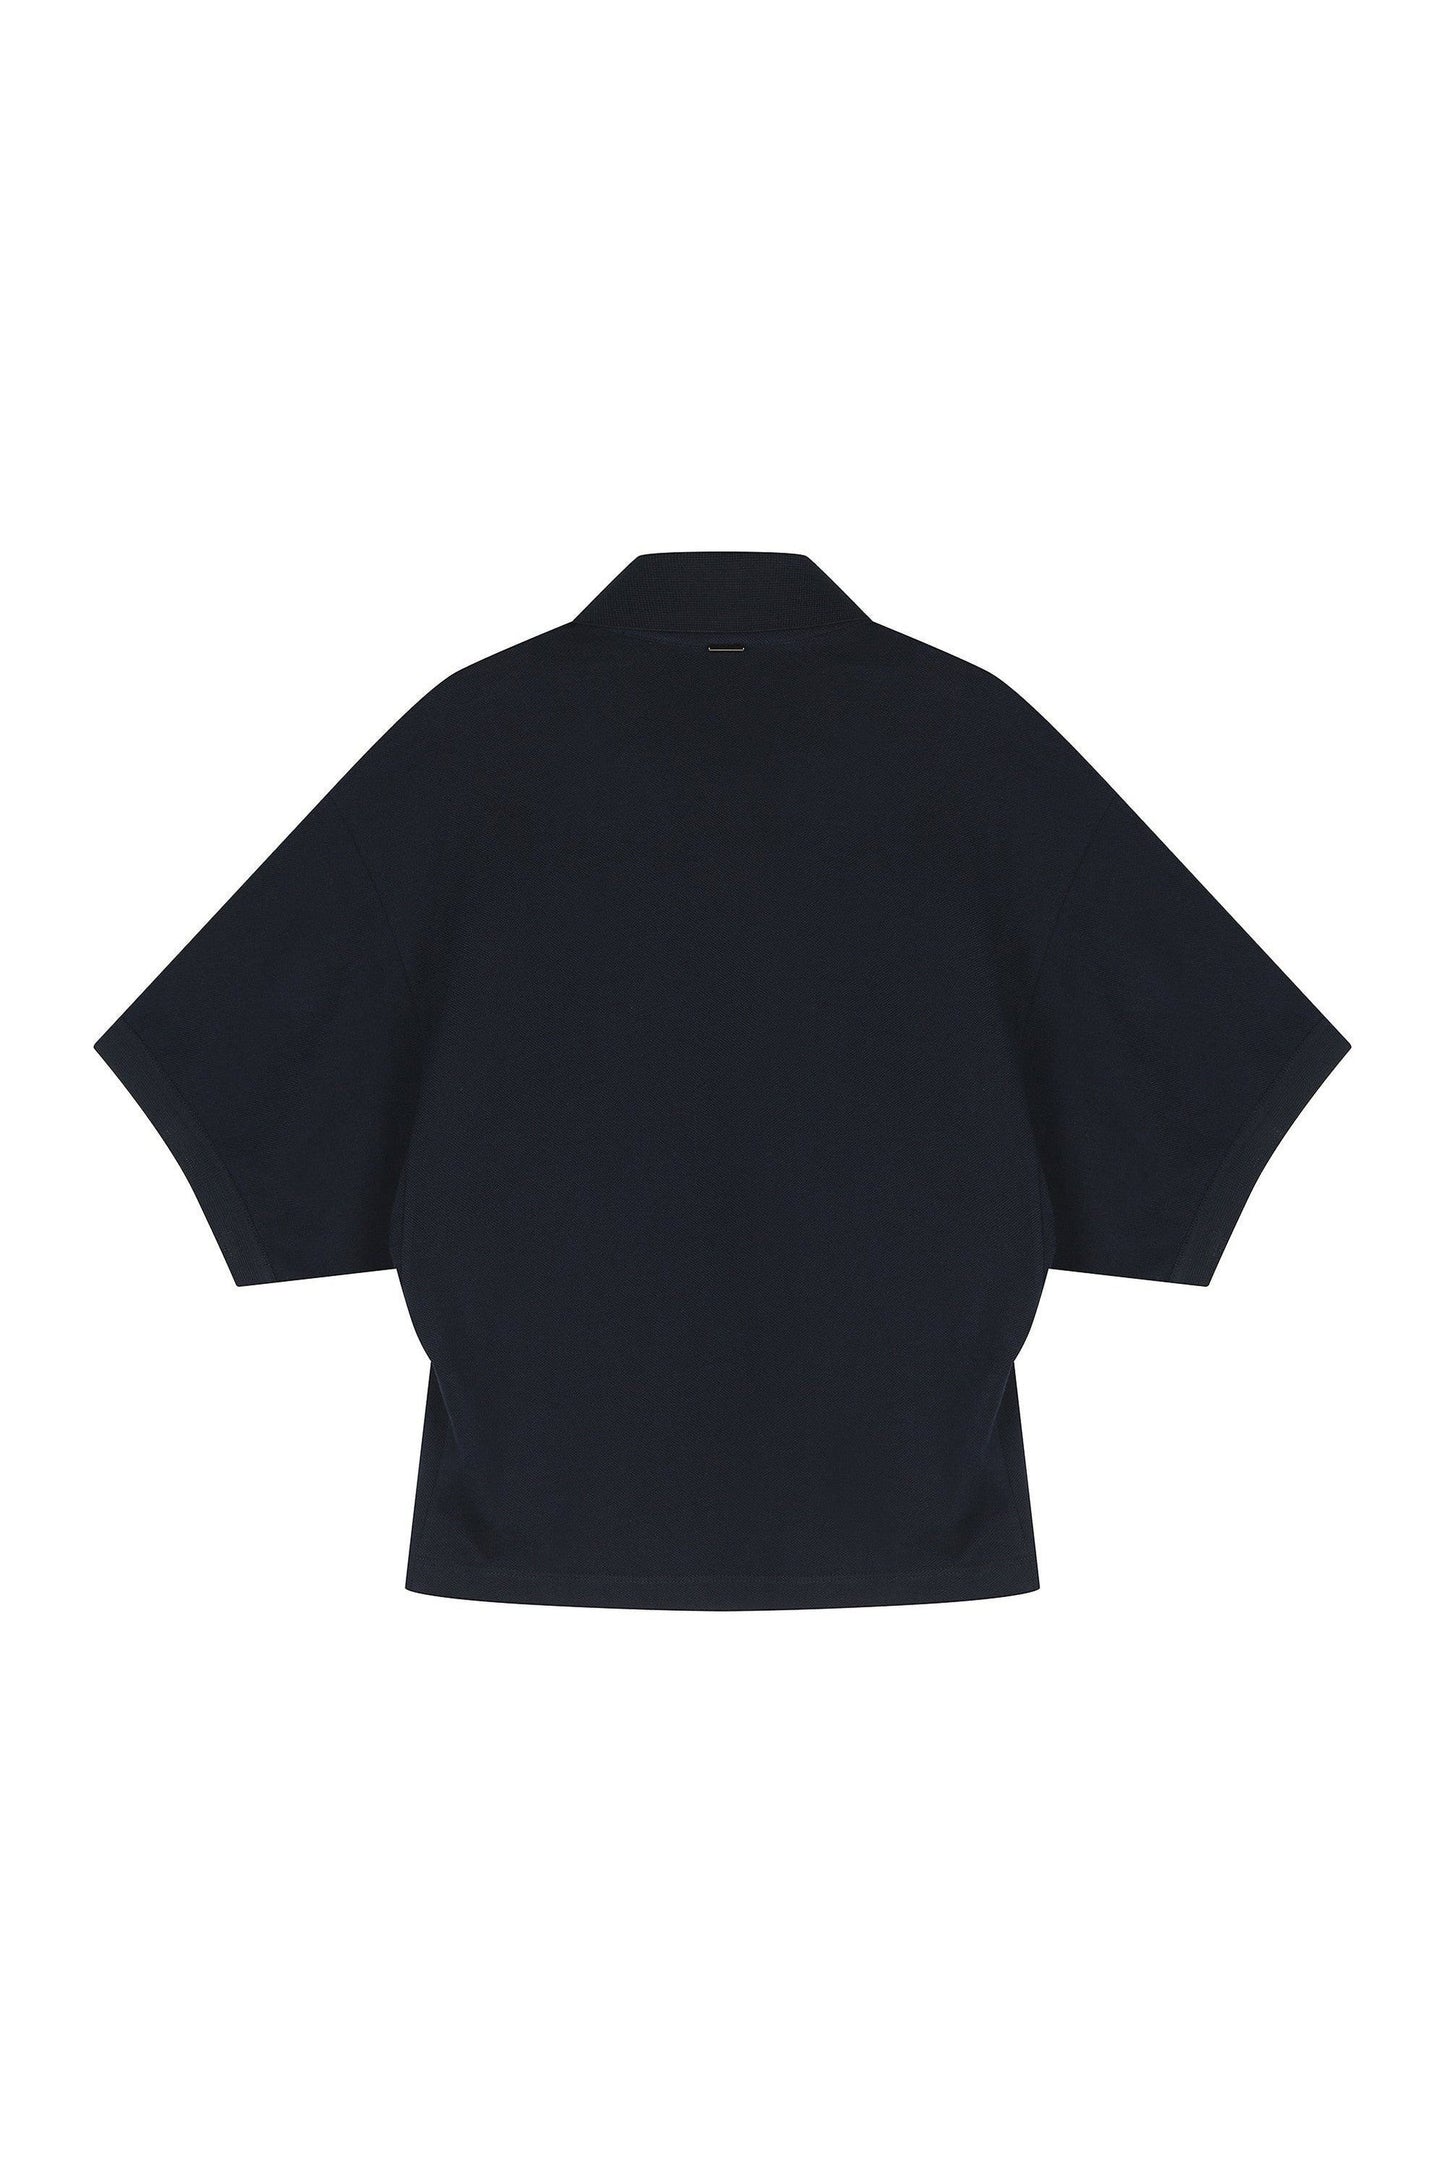 Asymmetric Pique Polo T-Shirt System